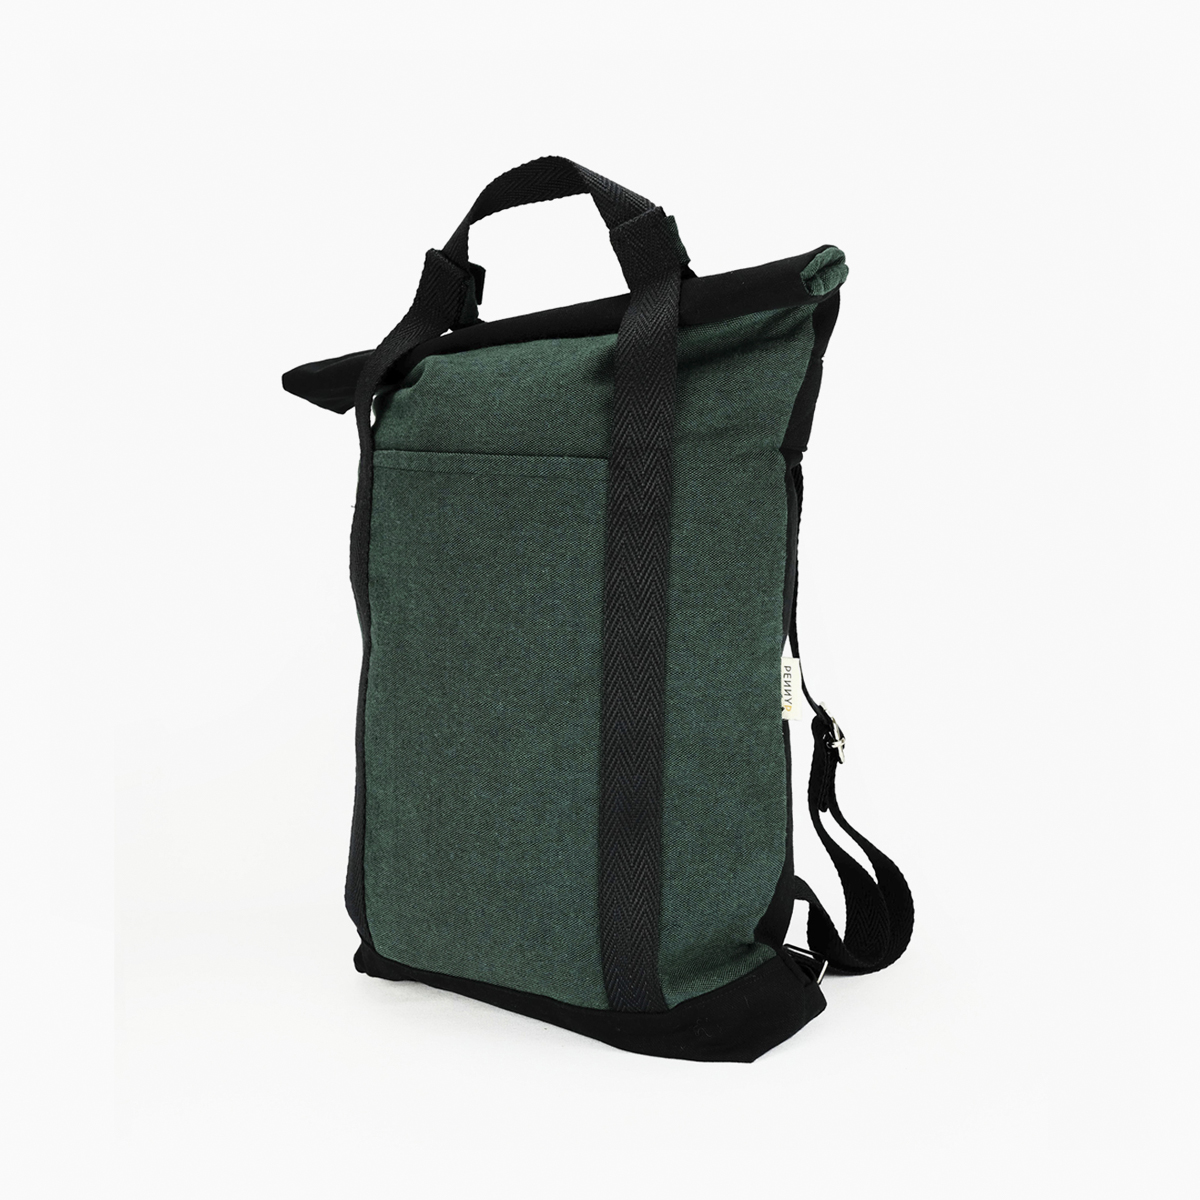 Convertible tote backpack dark green - black straps - PennyP